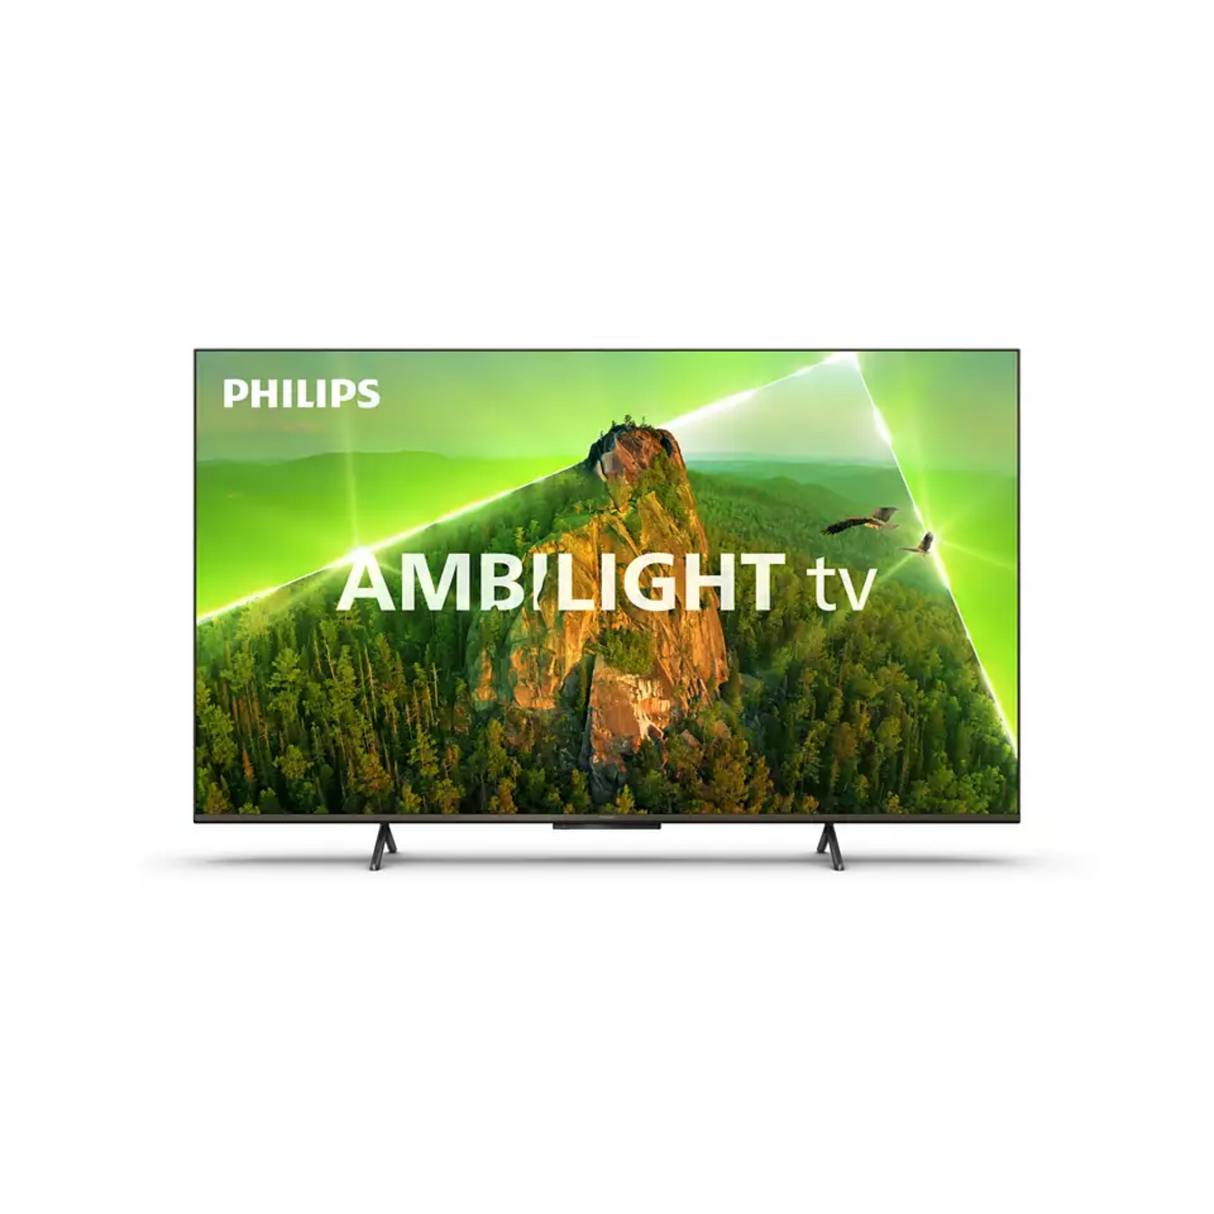 PHILIPS Ambilight 43PUS8108/12 43" Smart 4K Ultra HD HDR LED TV with Amazon Alexa